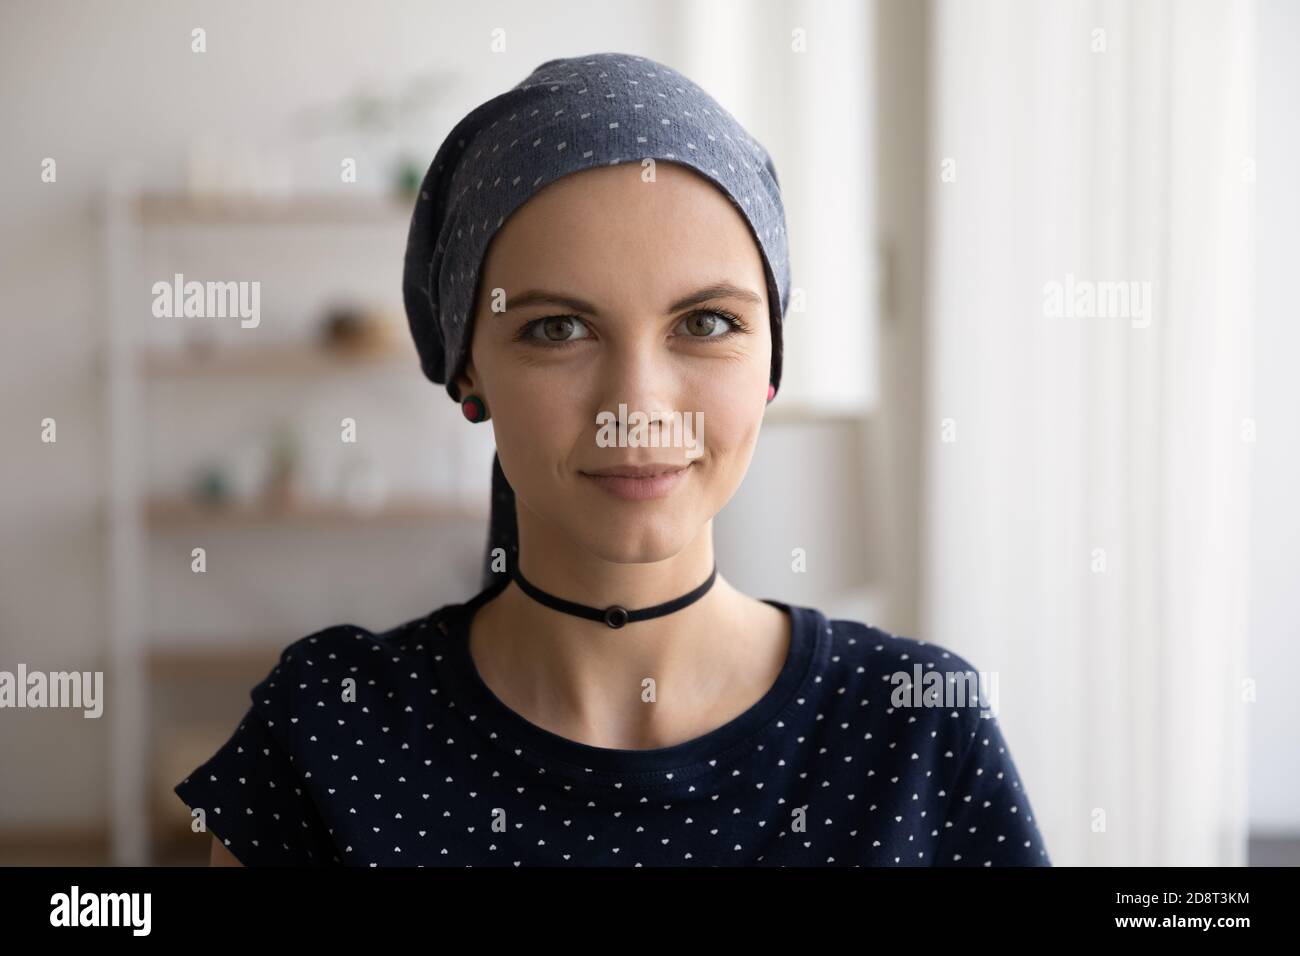 Head shot portrait attractive hairless woman wearing head scarf Stock Photo